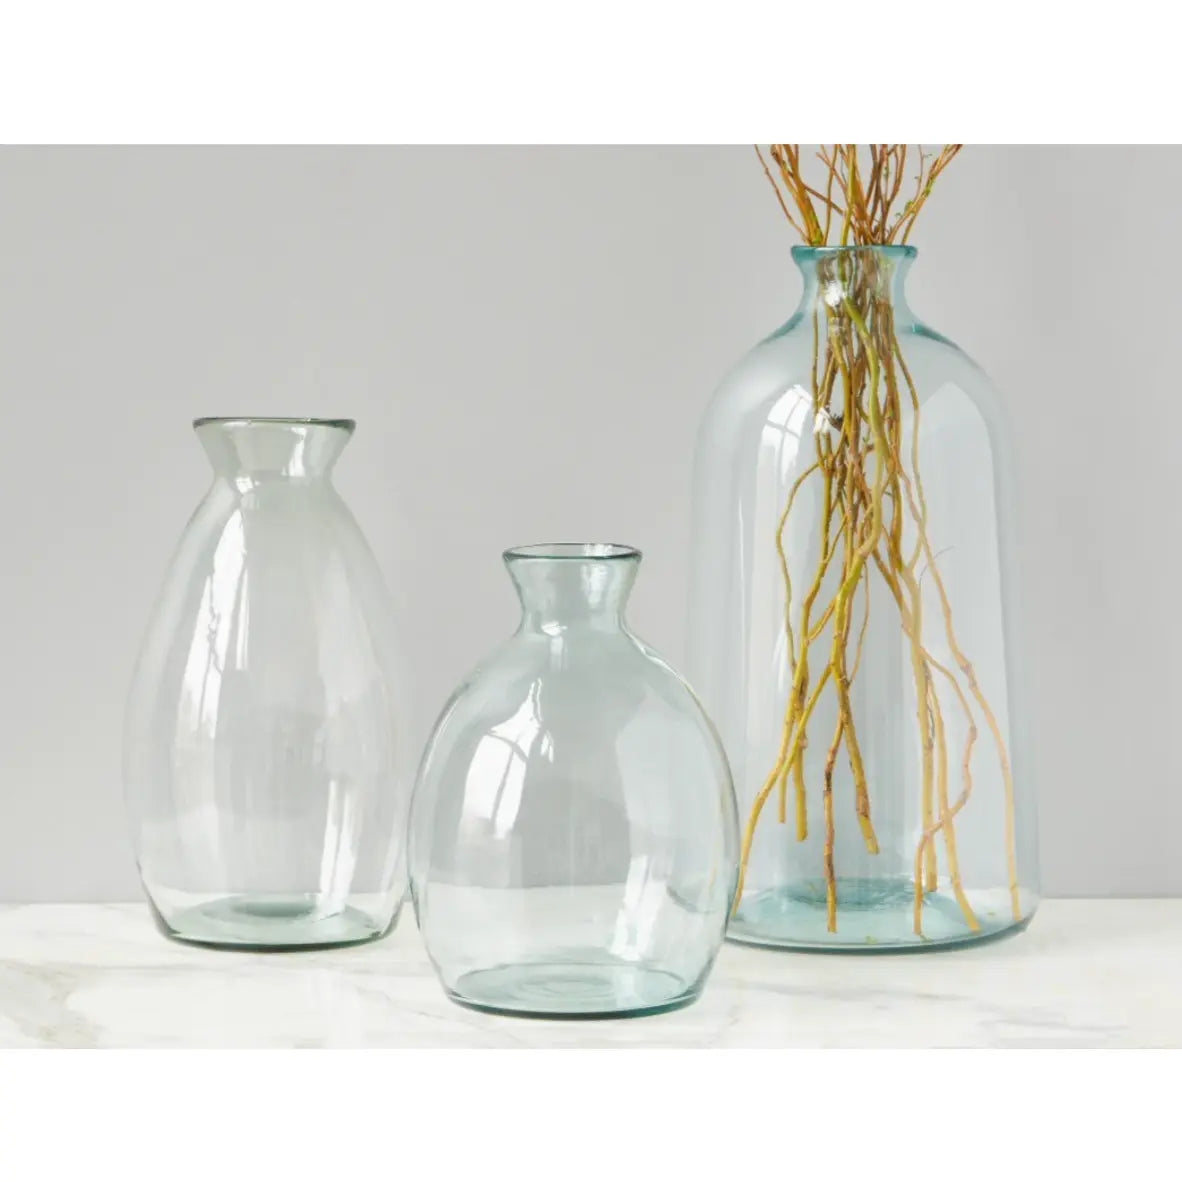 Artisanal French Glass Vases - Home Smith